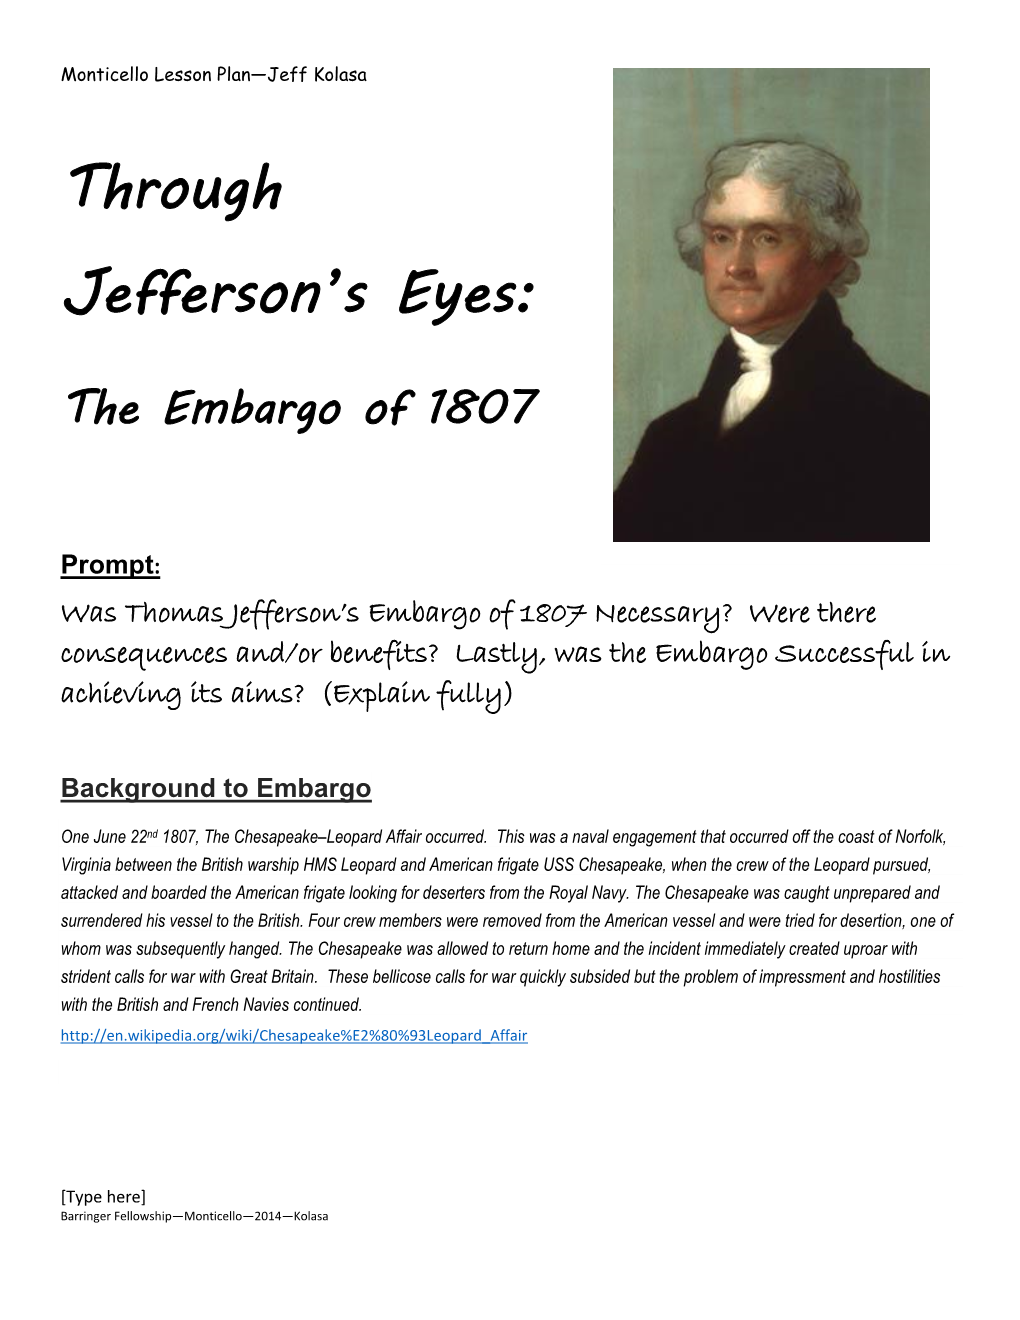 Through Jefferson's Eyes